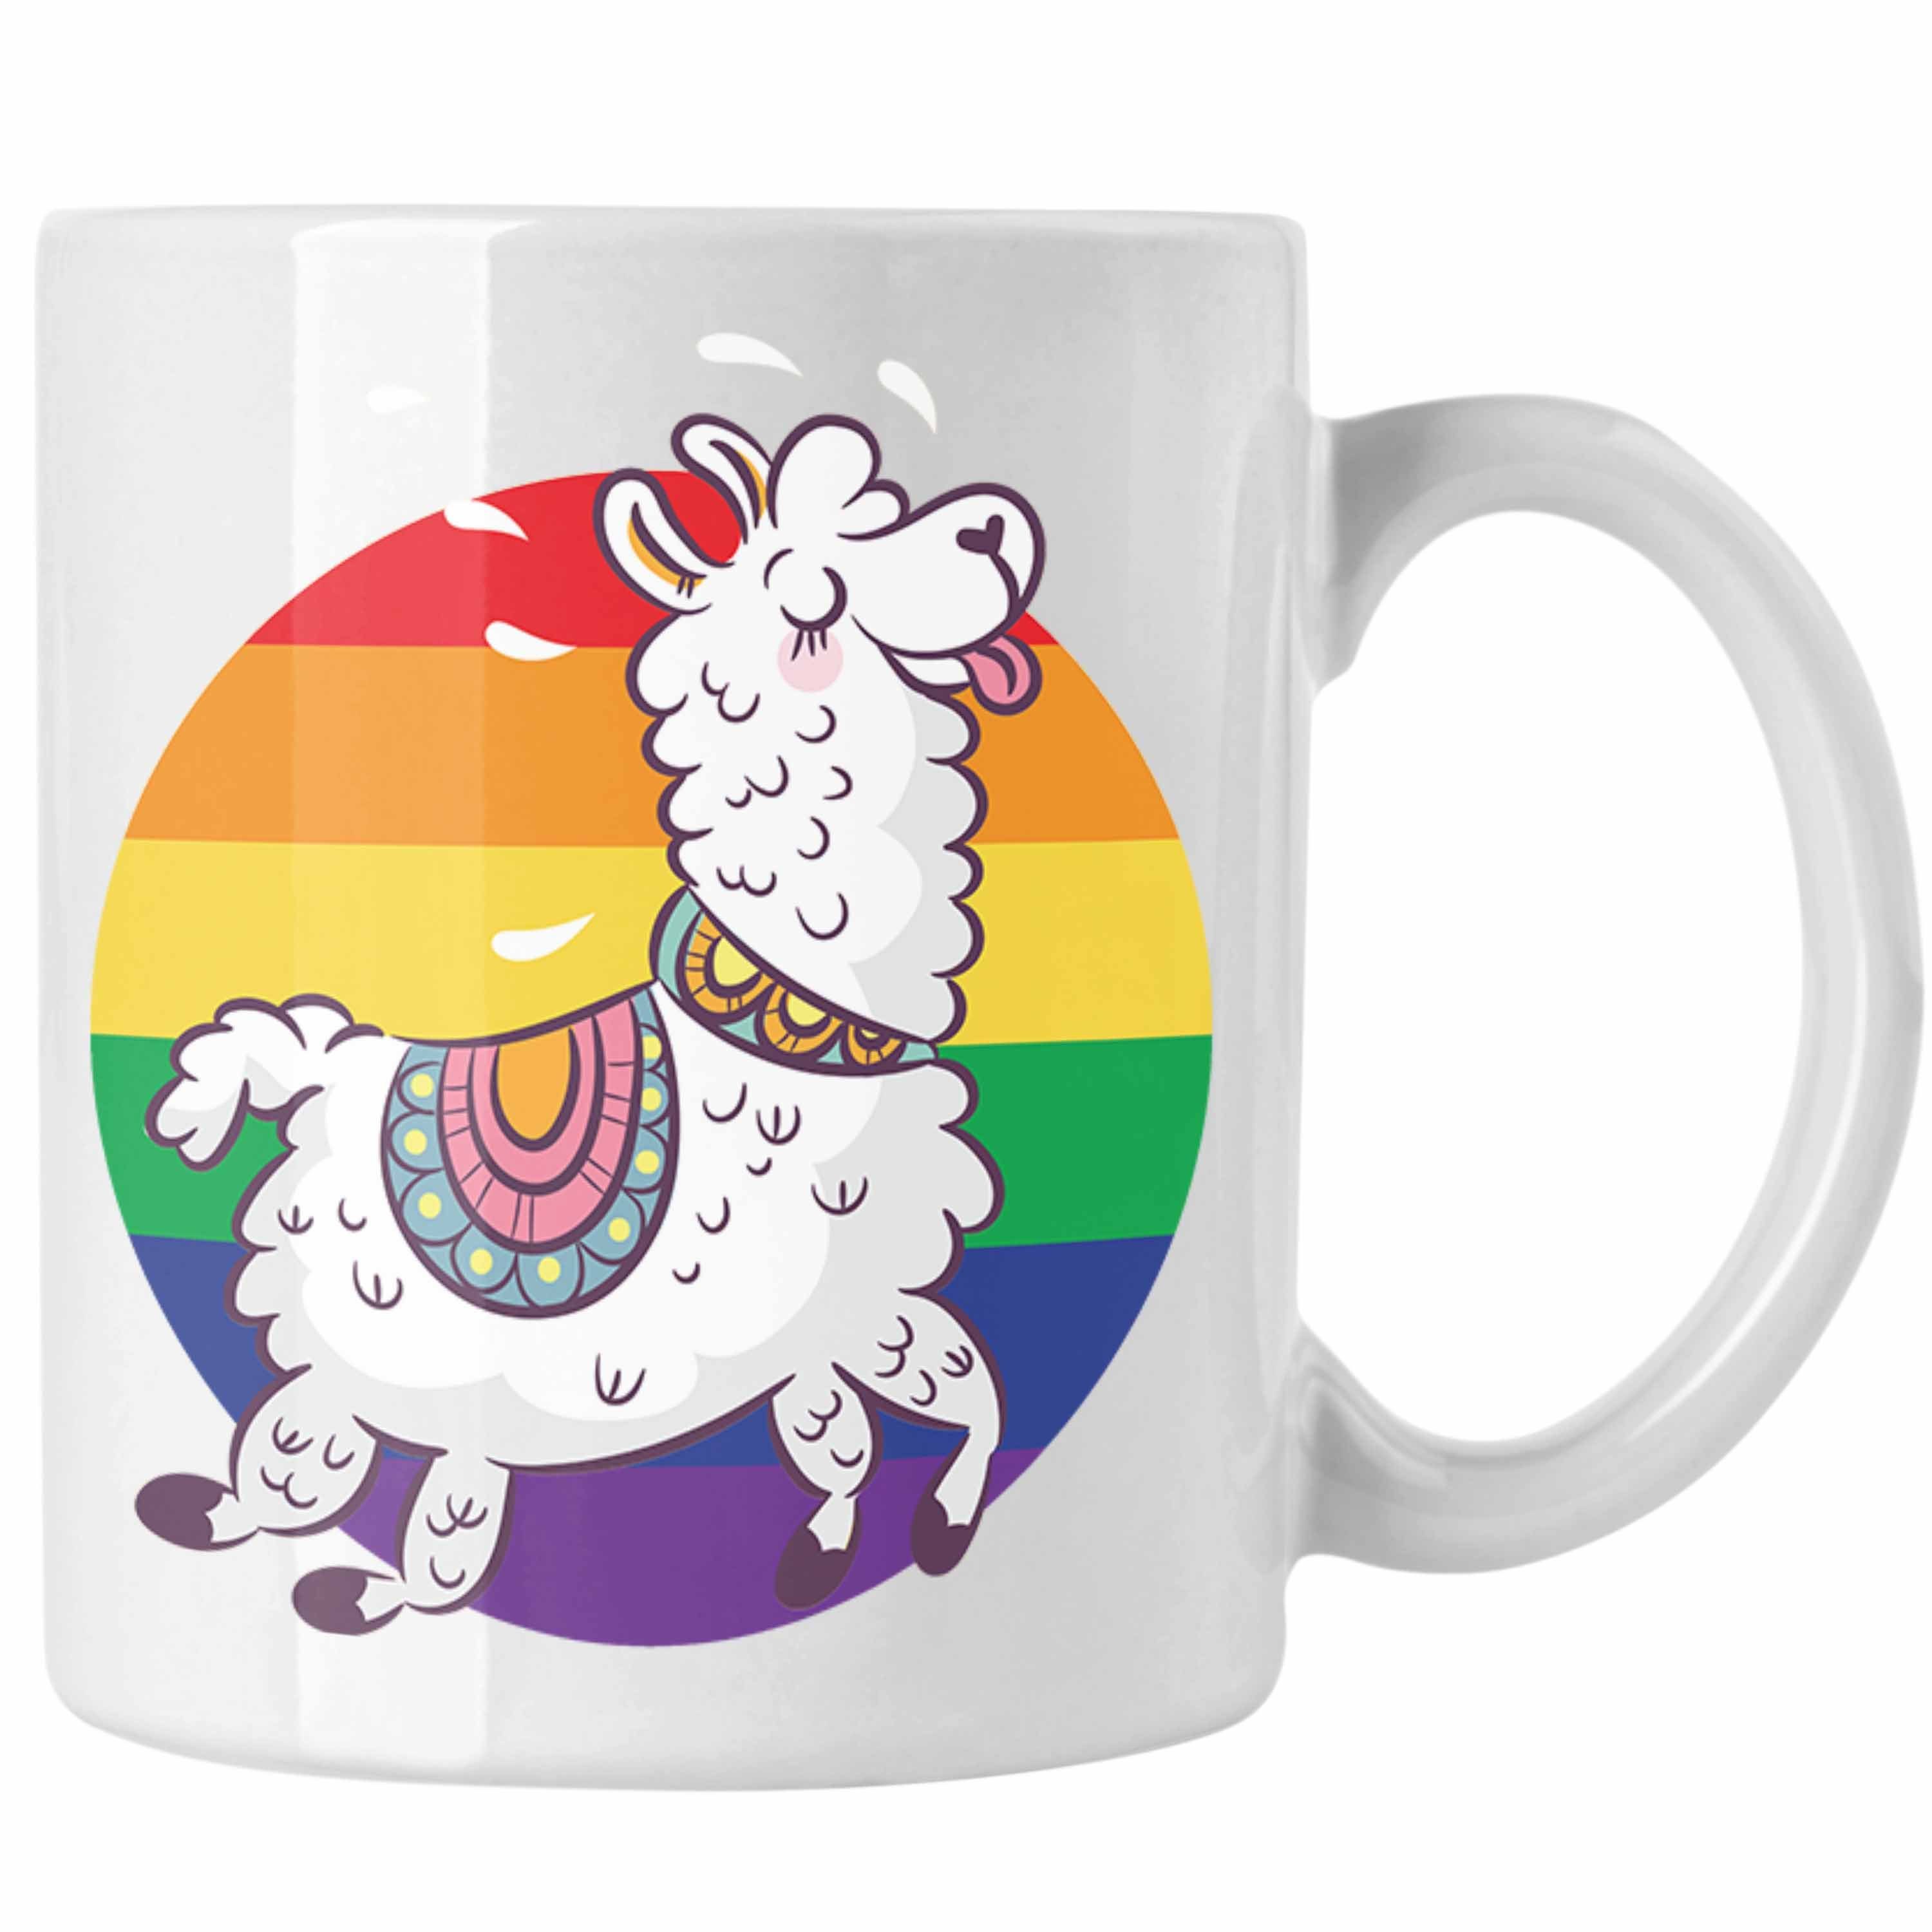 Trendation Tasse Trendation - Regenbogen Tasse Geschenk LGBT Schwule Lesben Transgender Grafik Pride Tolles Llama Weiss | Teetassen